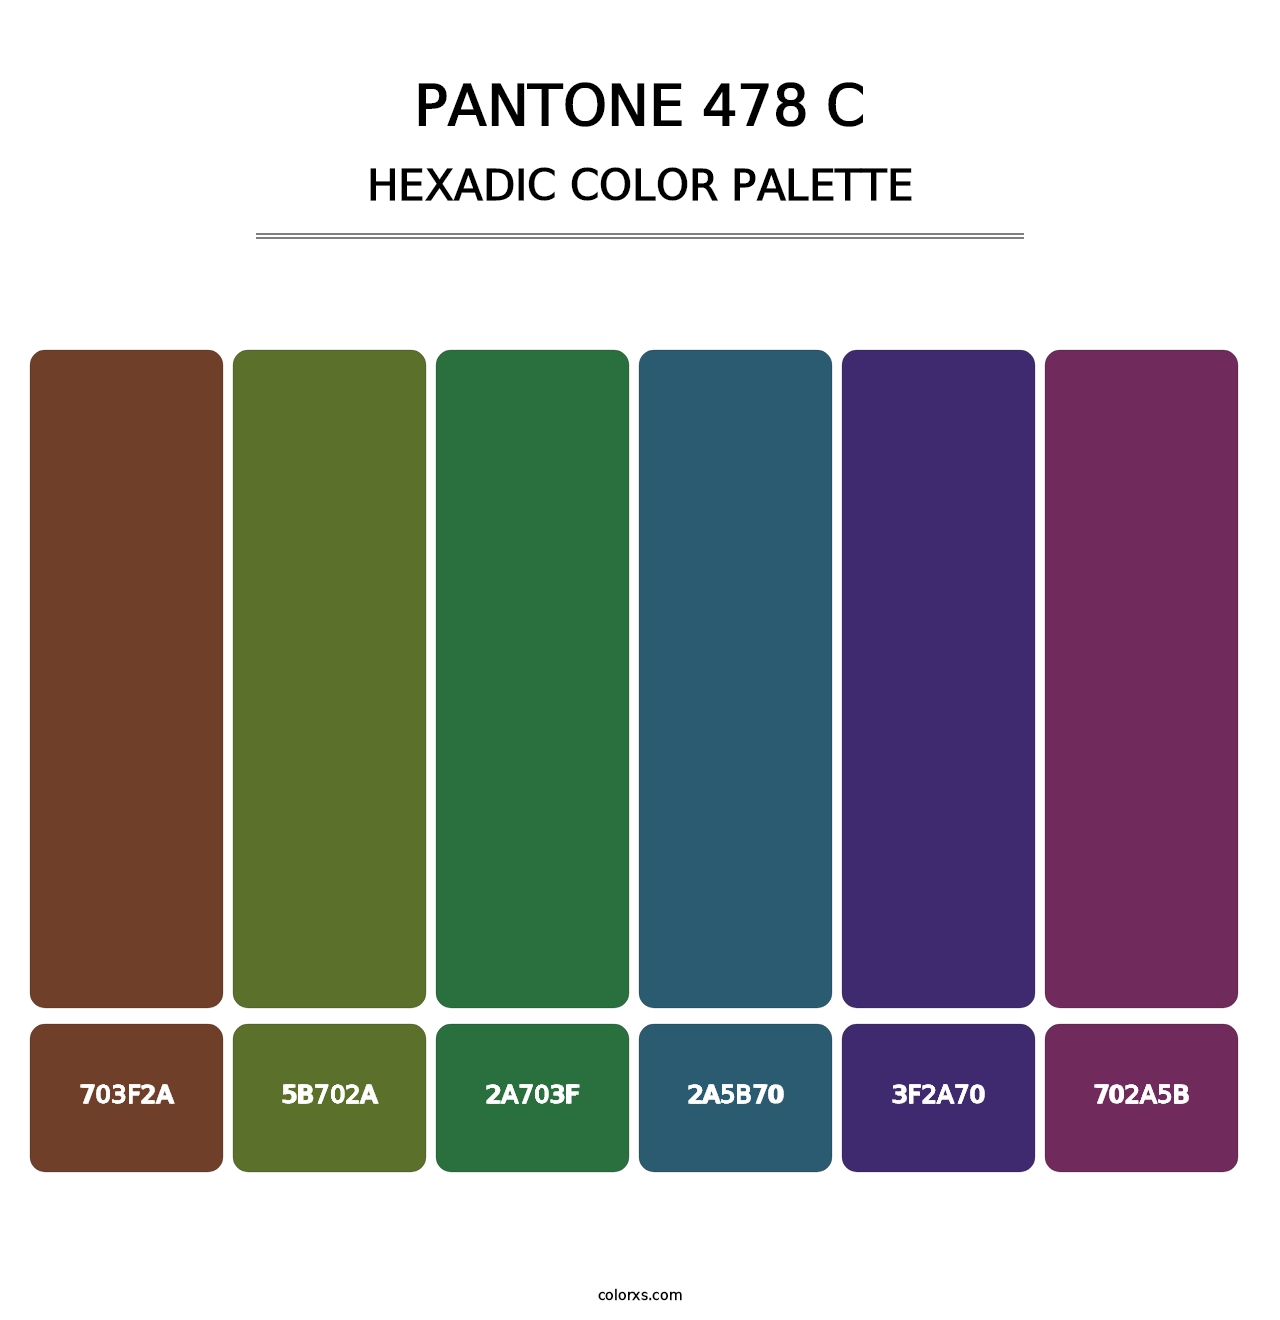 PANTONE 478 C - Hexadic Color Palette